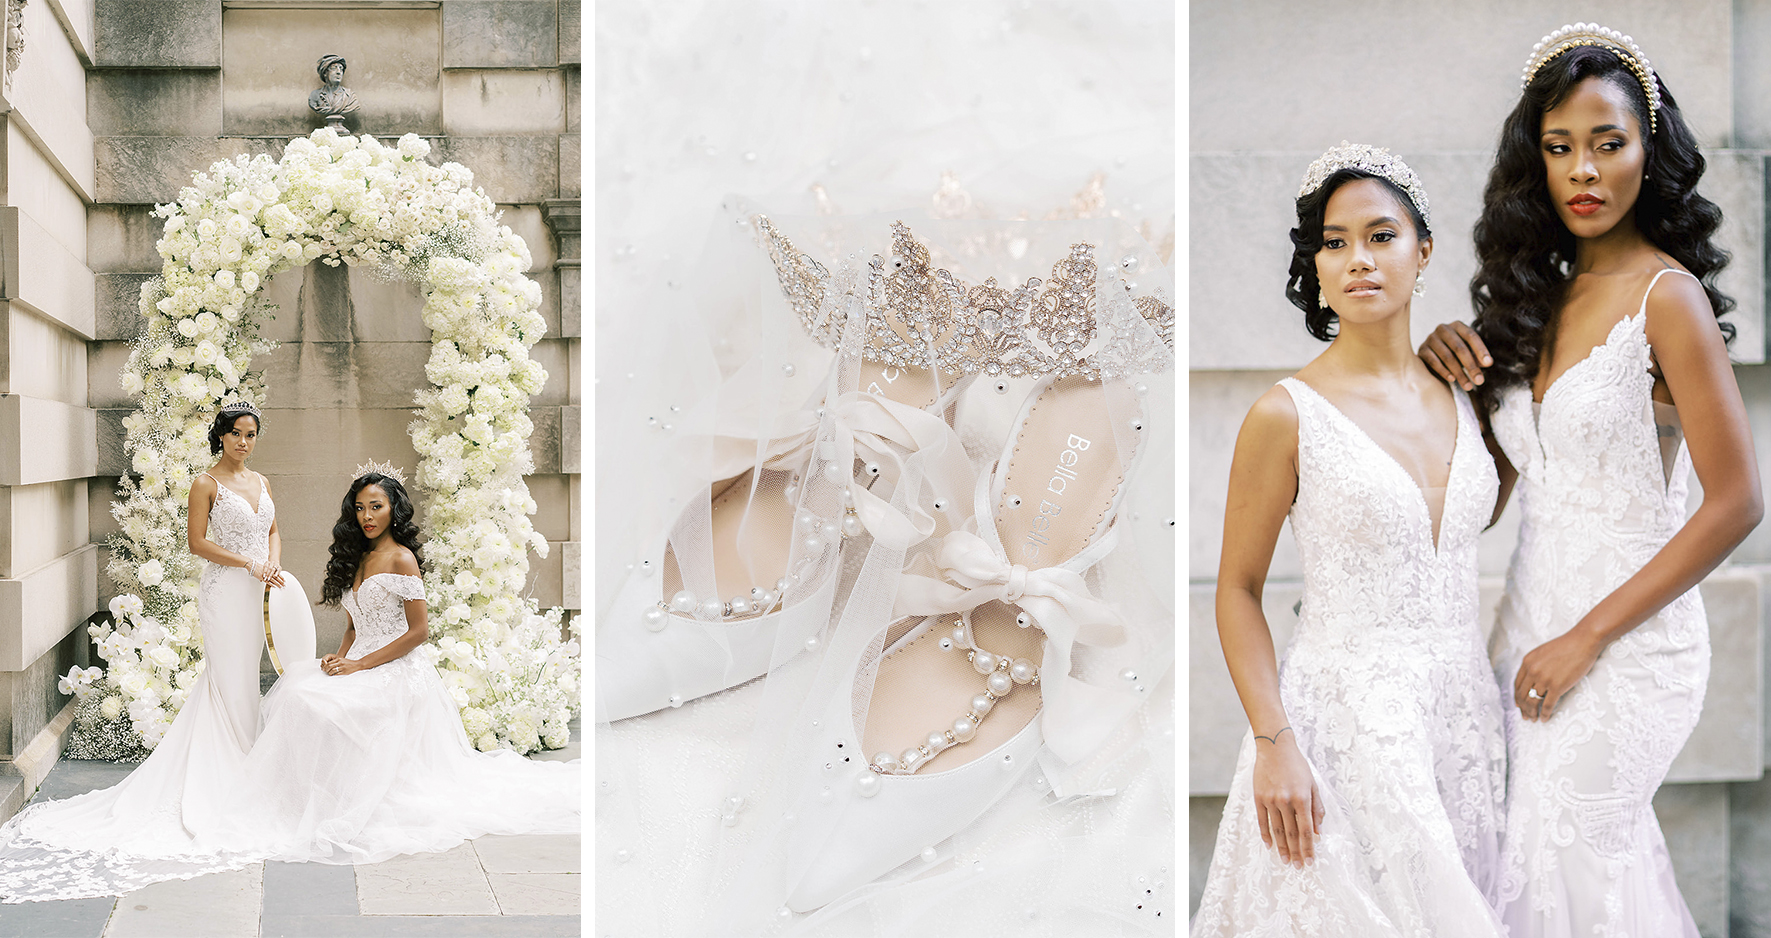 Simple elegant wedding dresses in NYC by WONA